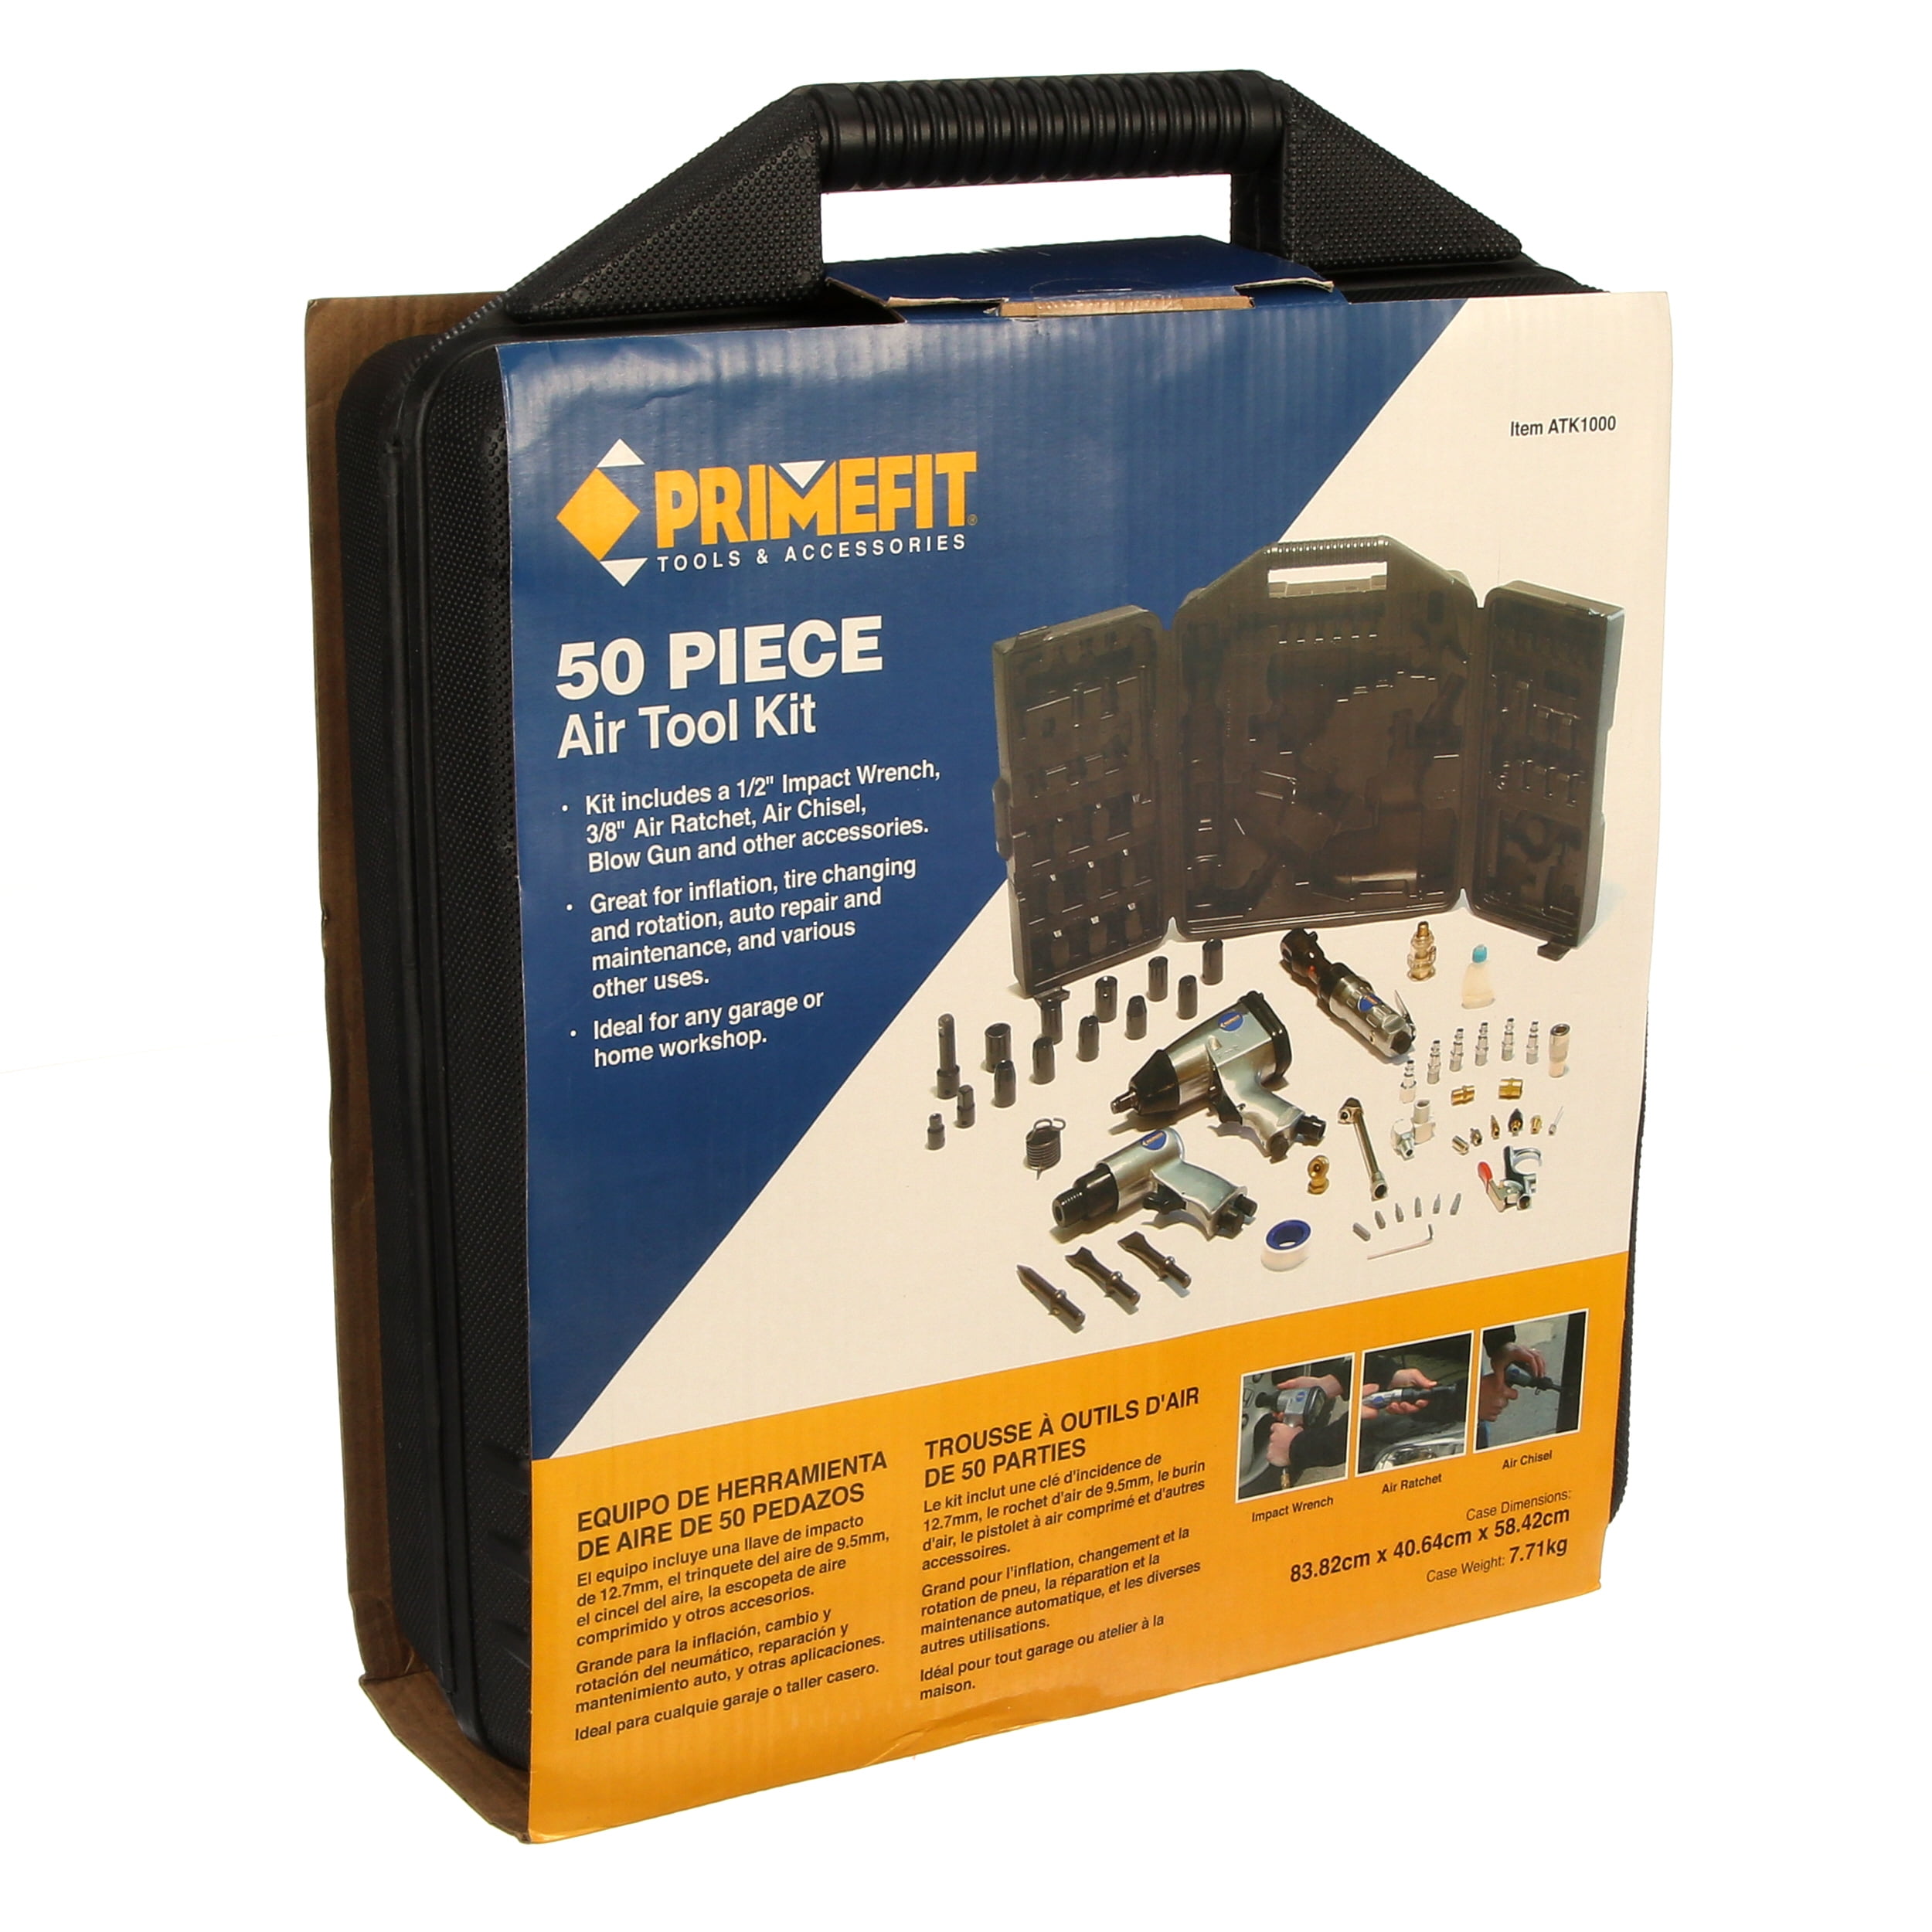 Primefit Tools and Accessories 50-Piece Air Compressor